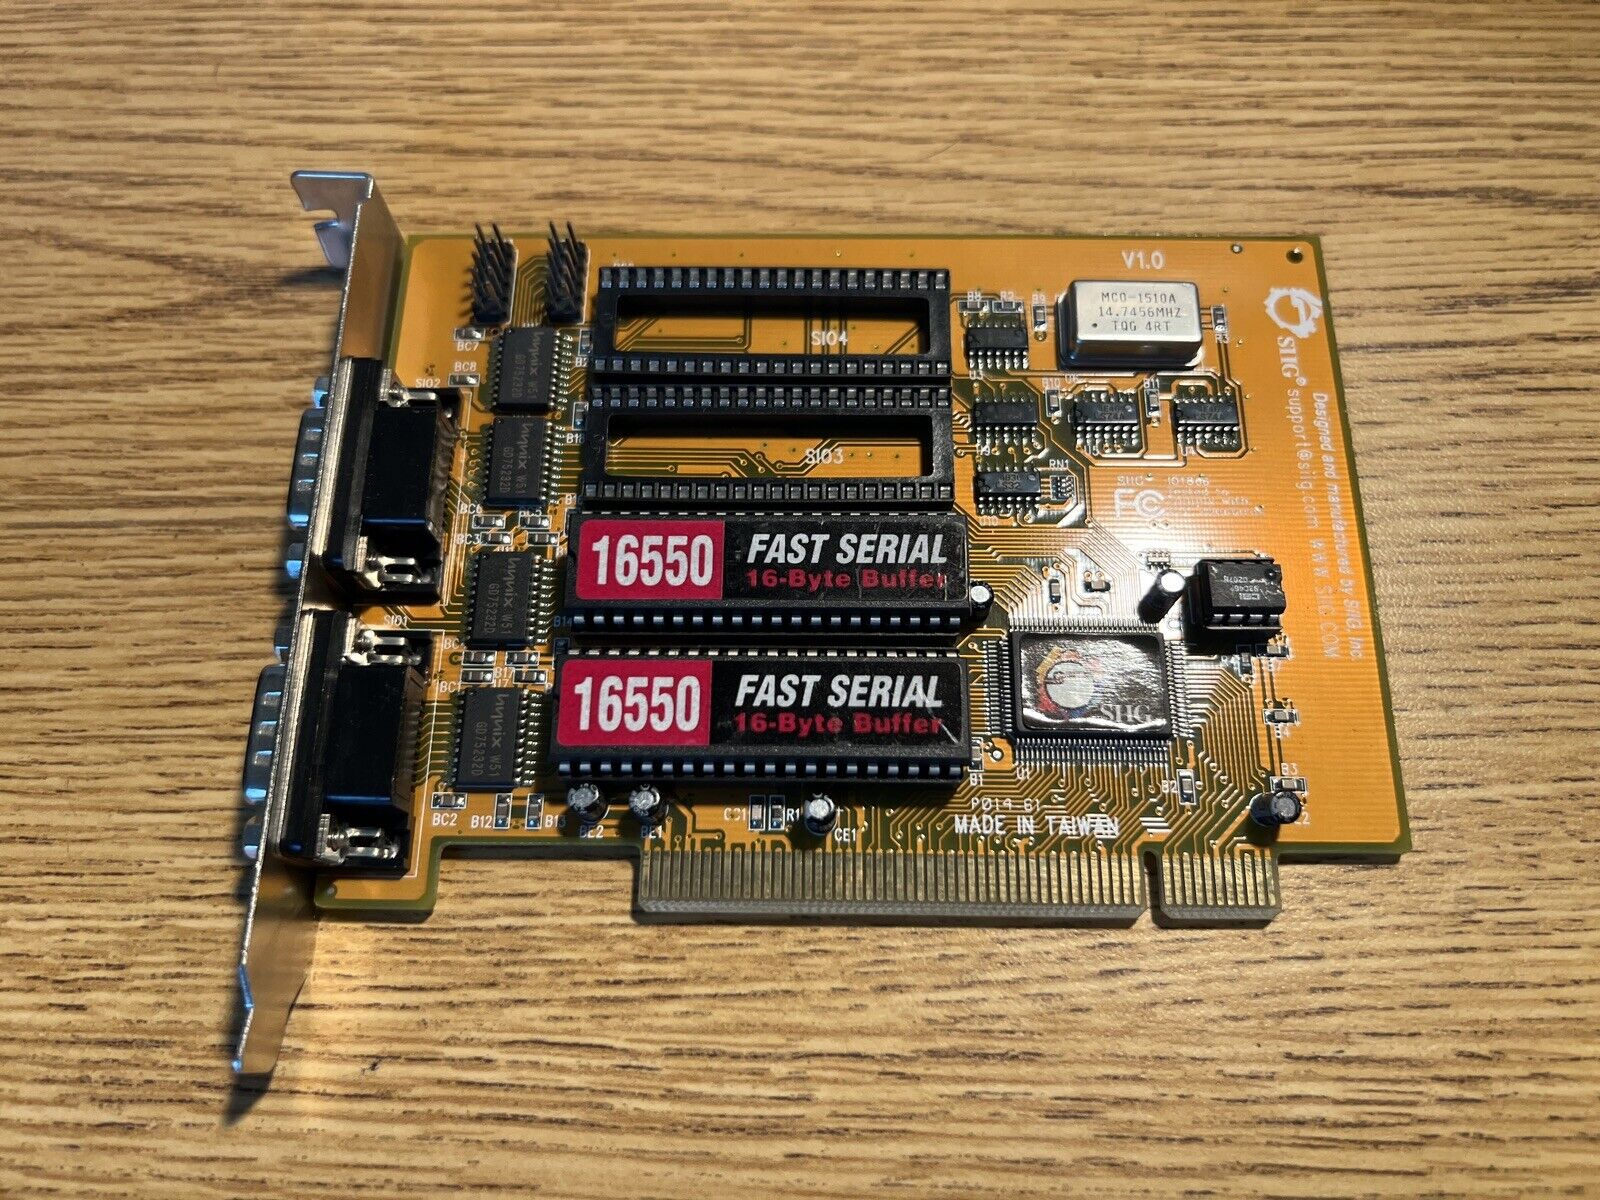 SIIG JJ-P04212 High Speed Dual Port Serial PCI Adapter J6M041200129 IO1866